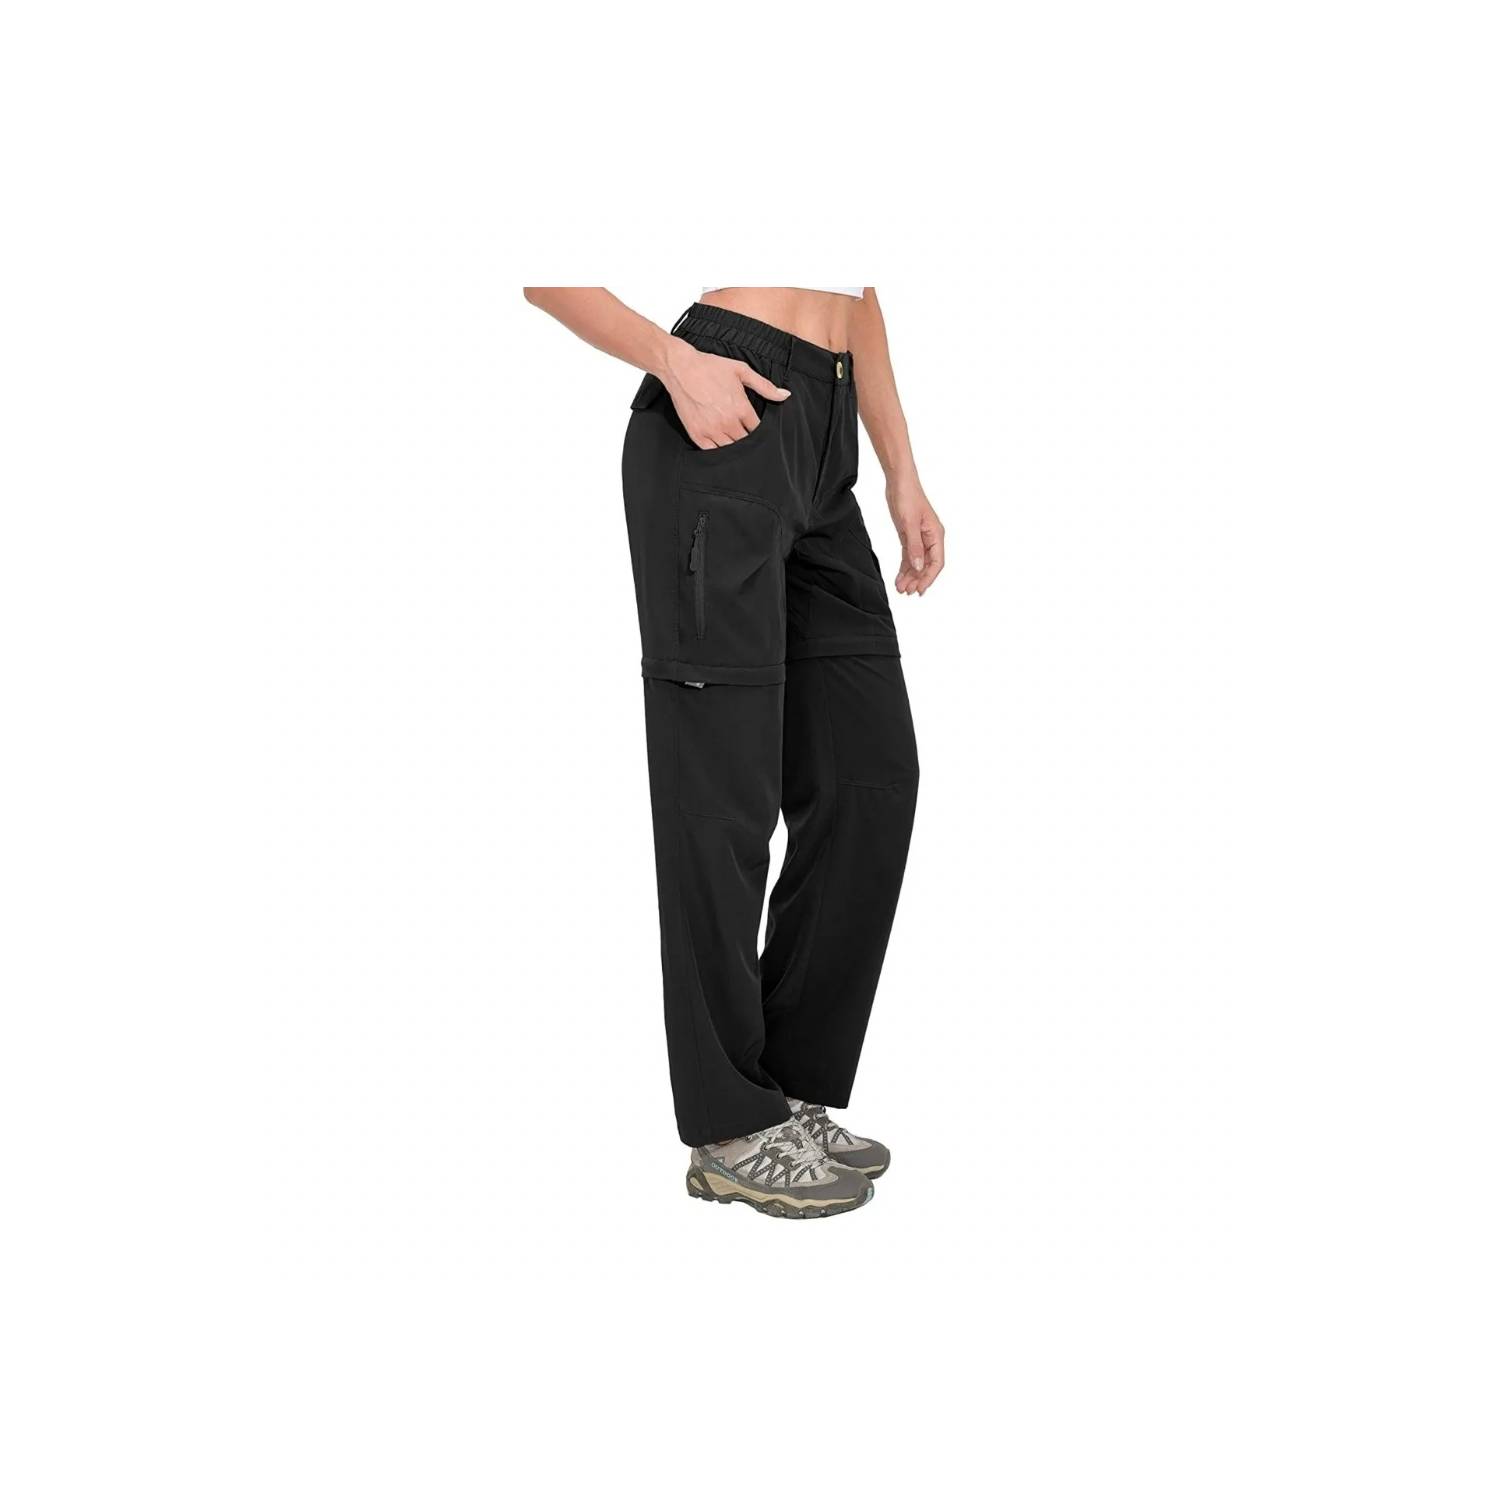 Pantalones desmontables - PANTALONES - MUJER